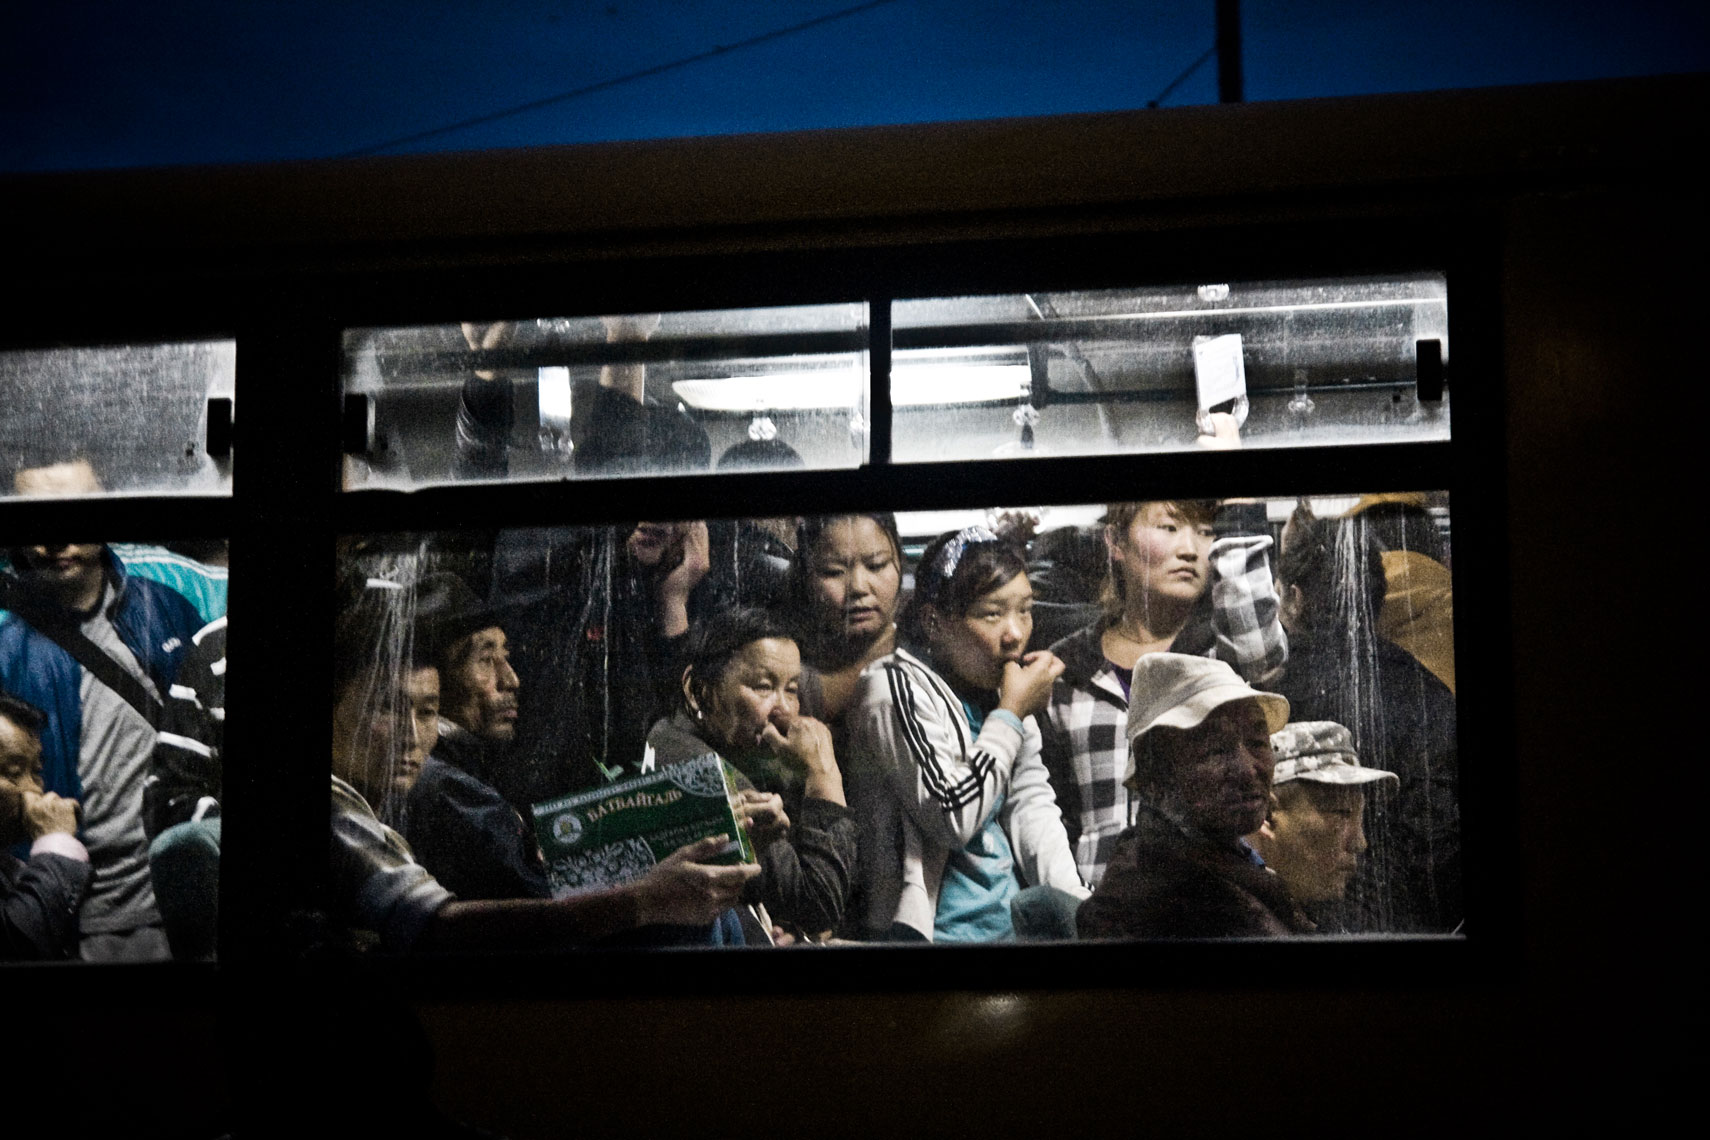 MONGOLIA. Ulan Bator, 2012. People on a bus.